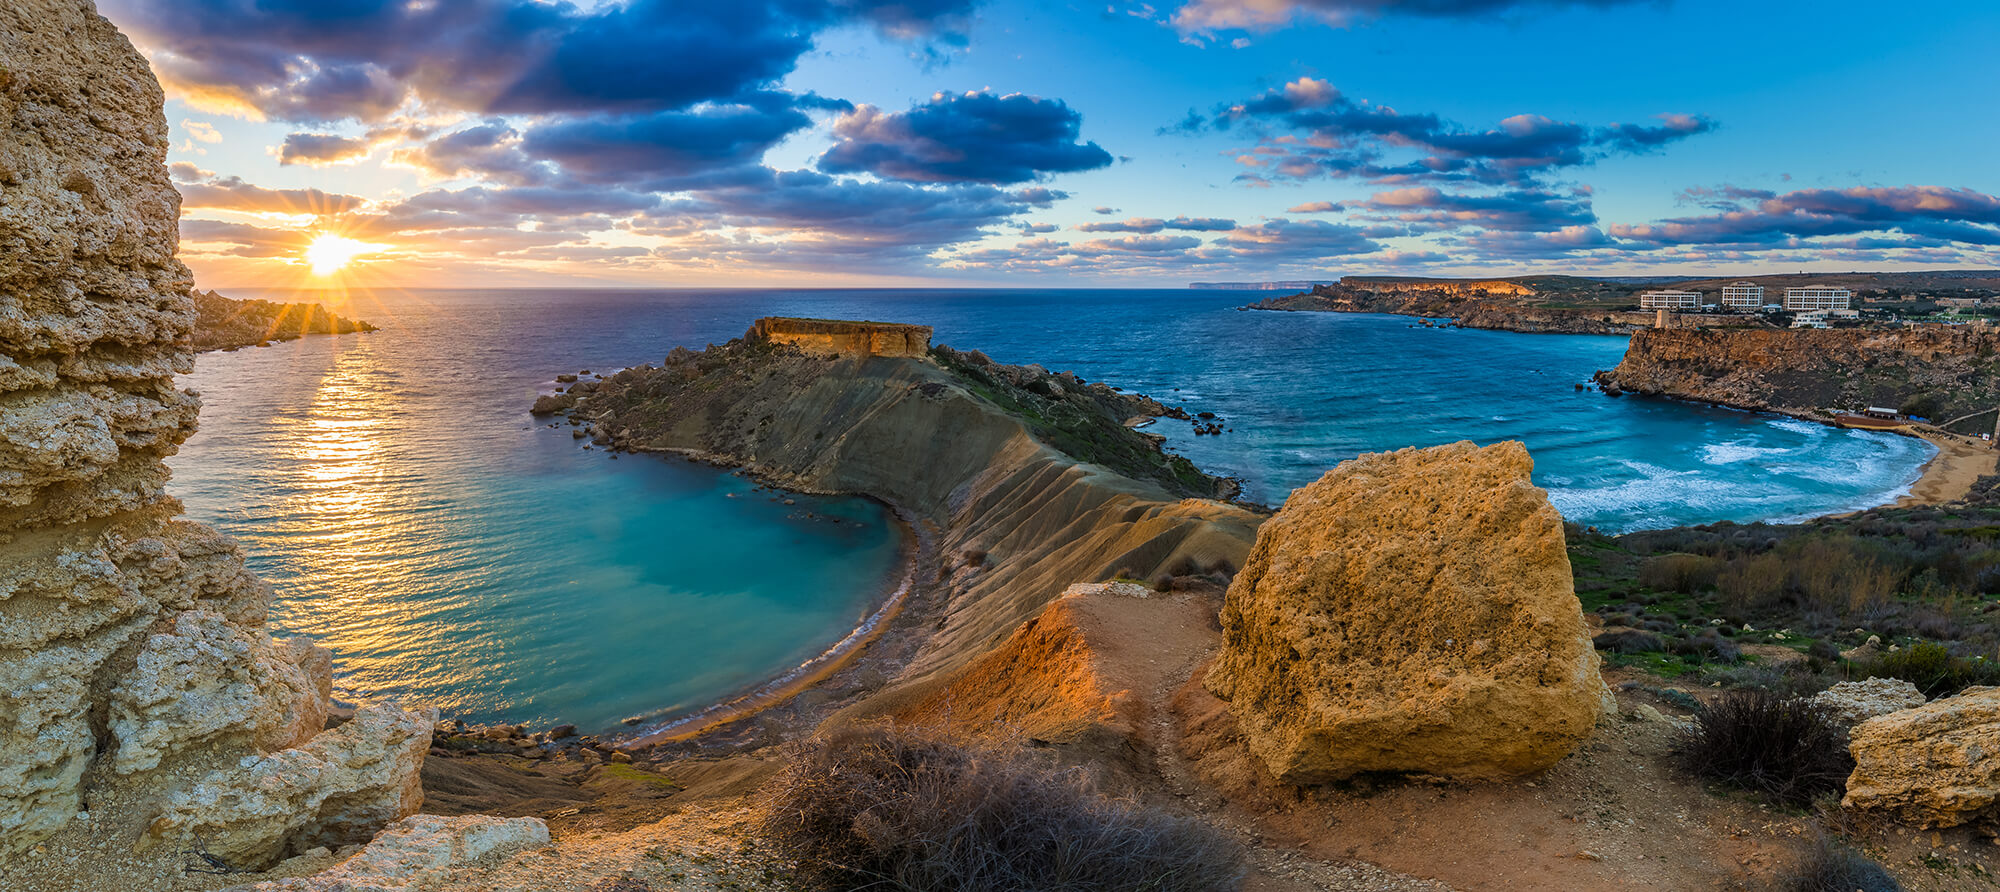 Korber Exhibitions - Gnejna Bay near Mgarr, Malta